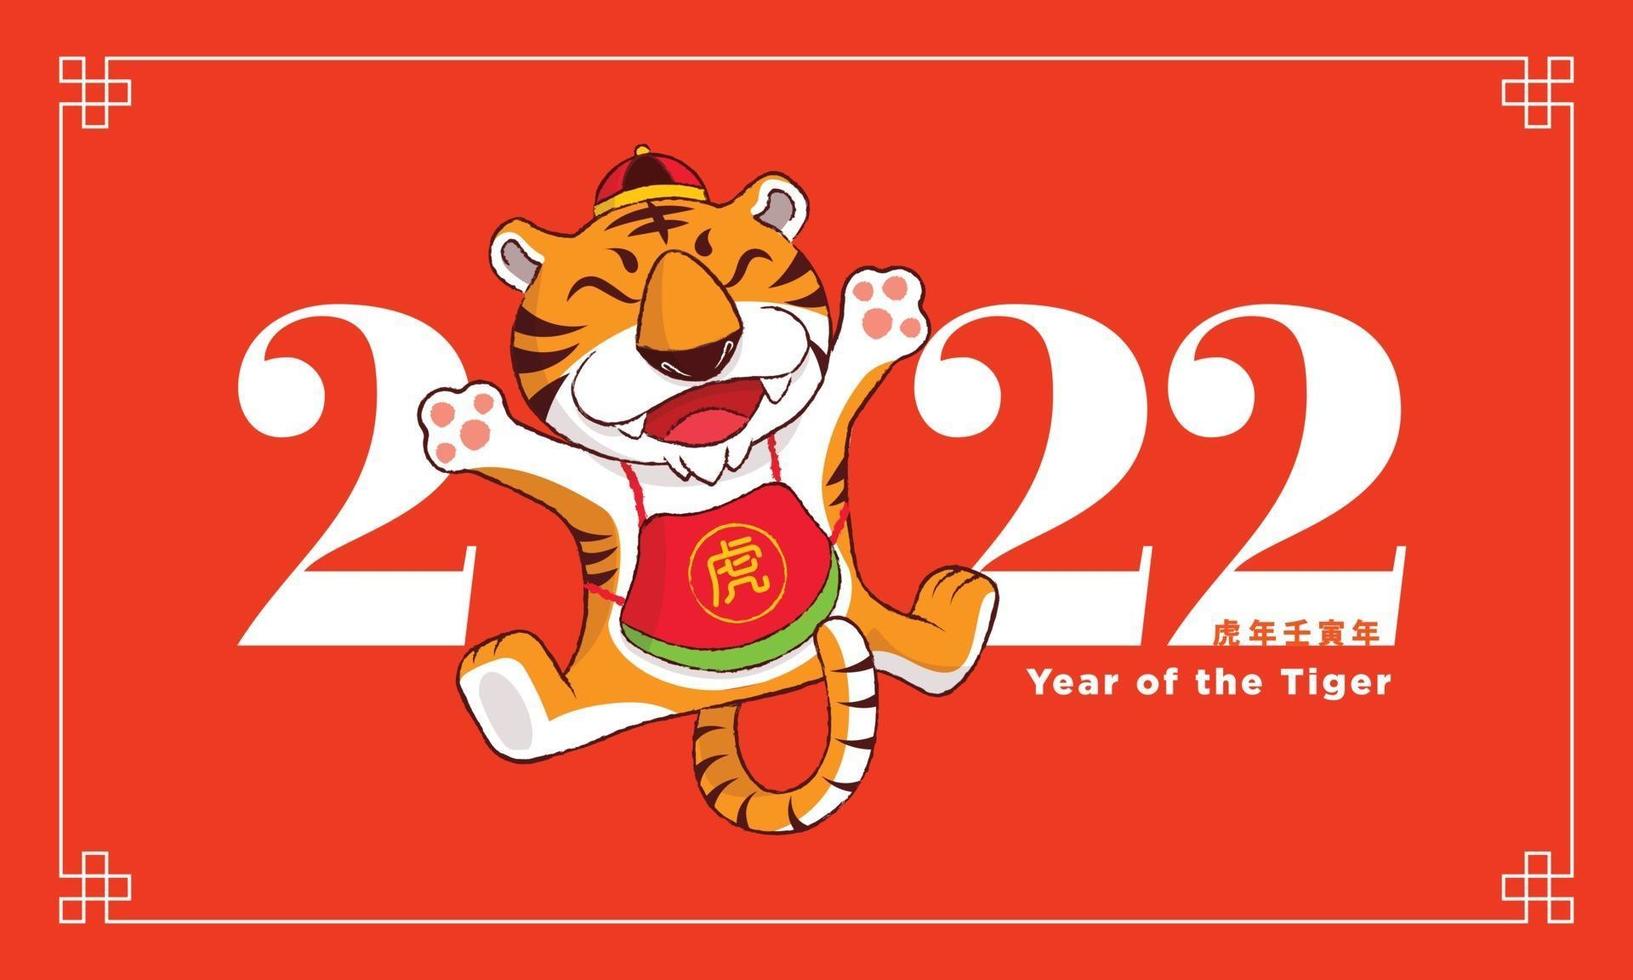 desenho animado bonito tigre pulando em 2022 cny background vetor